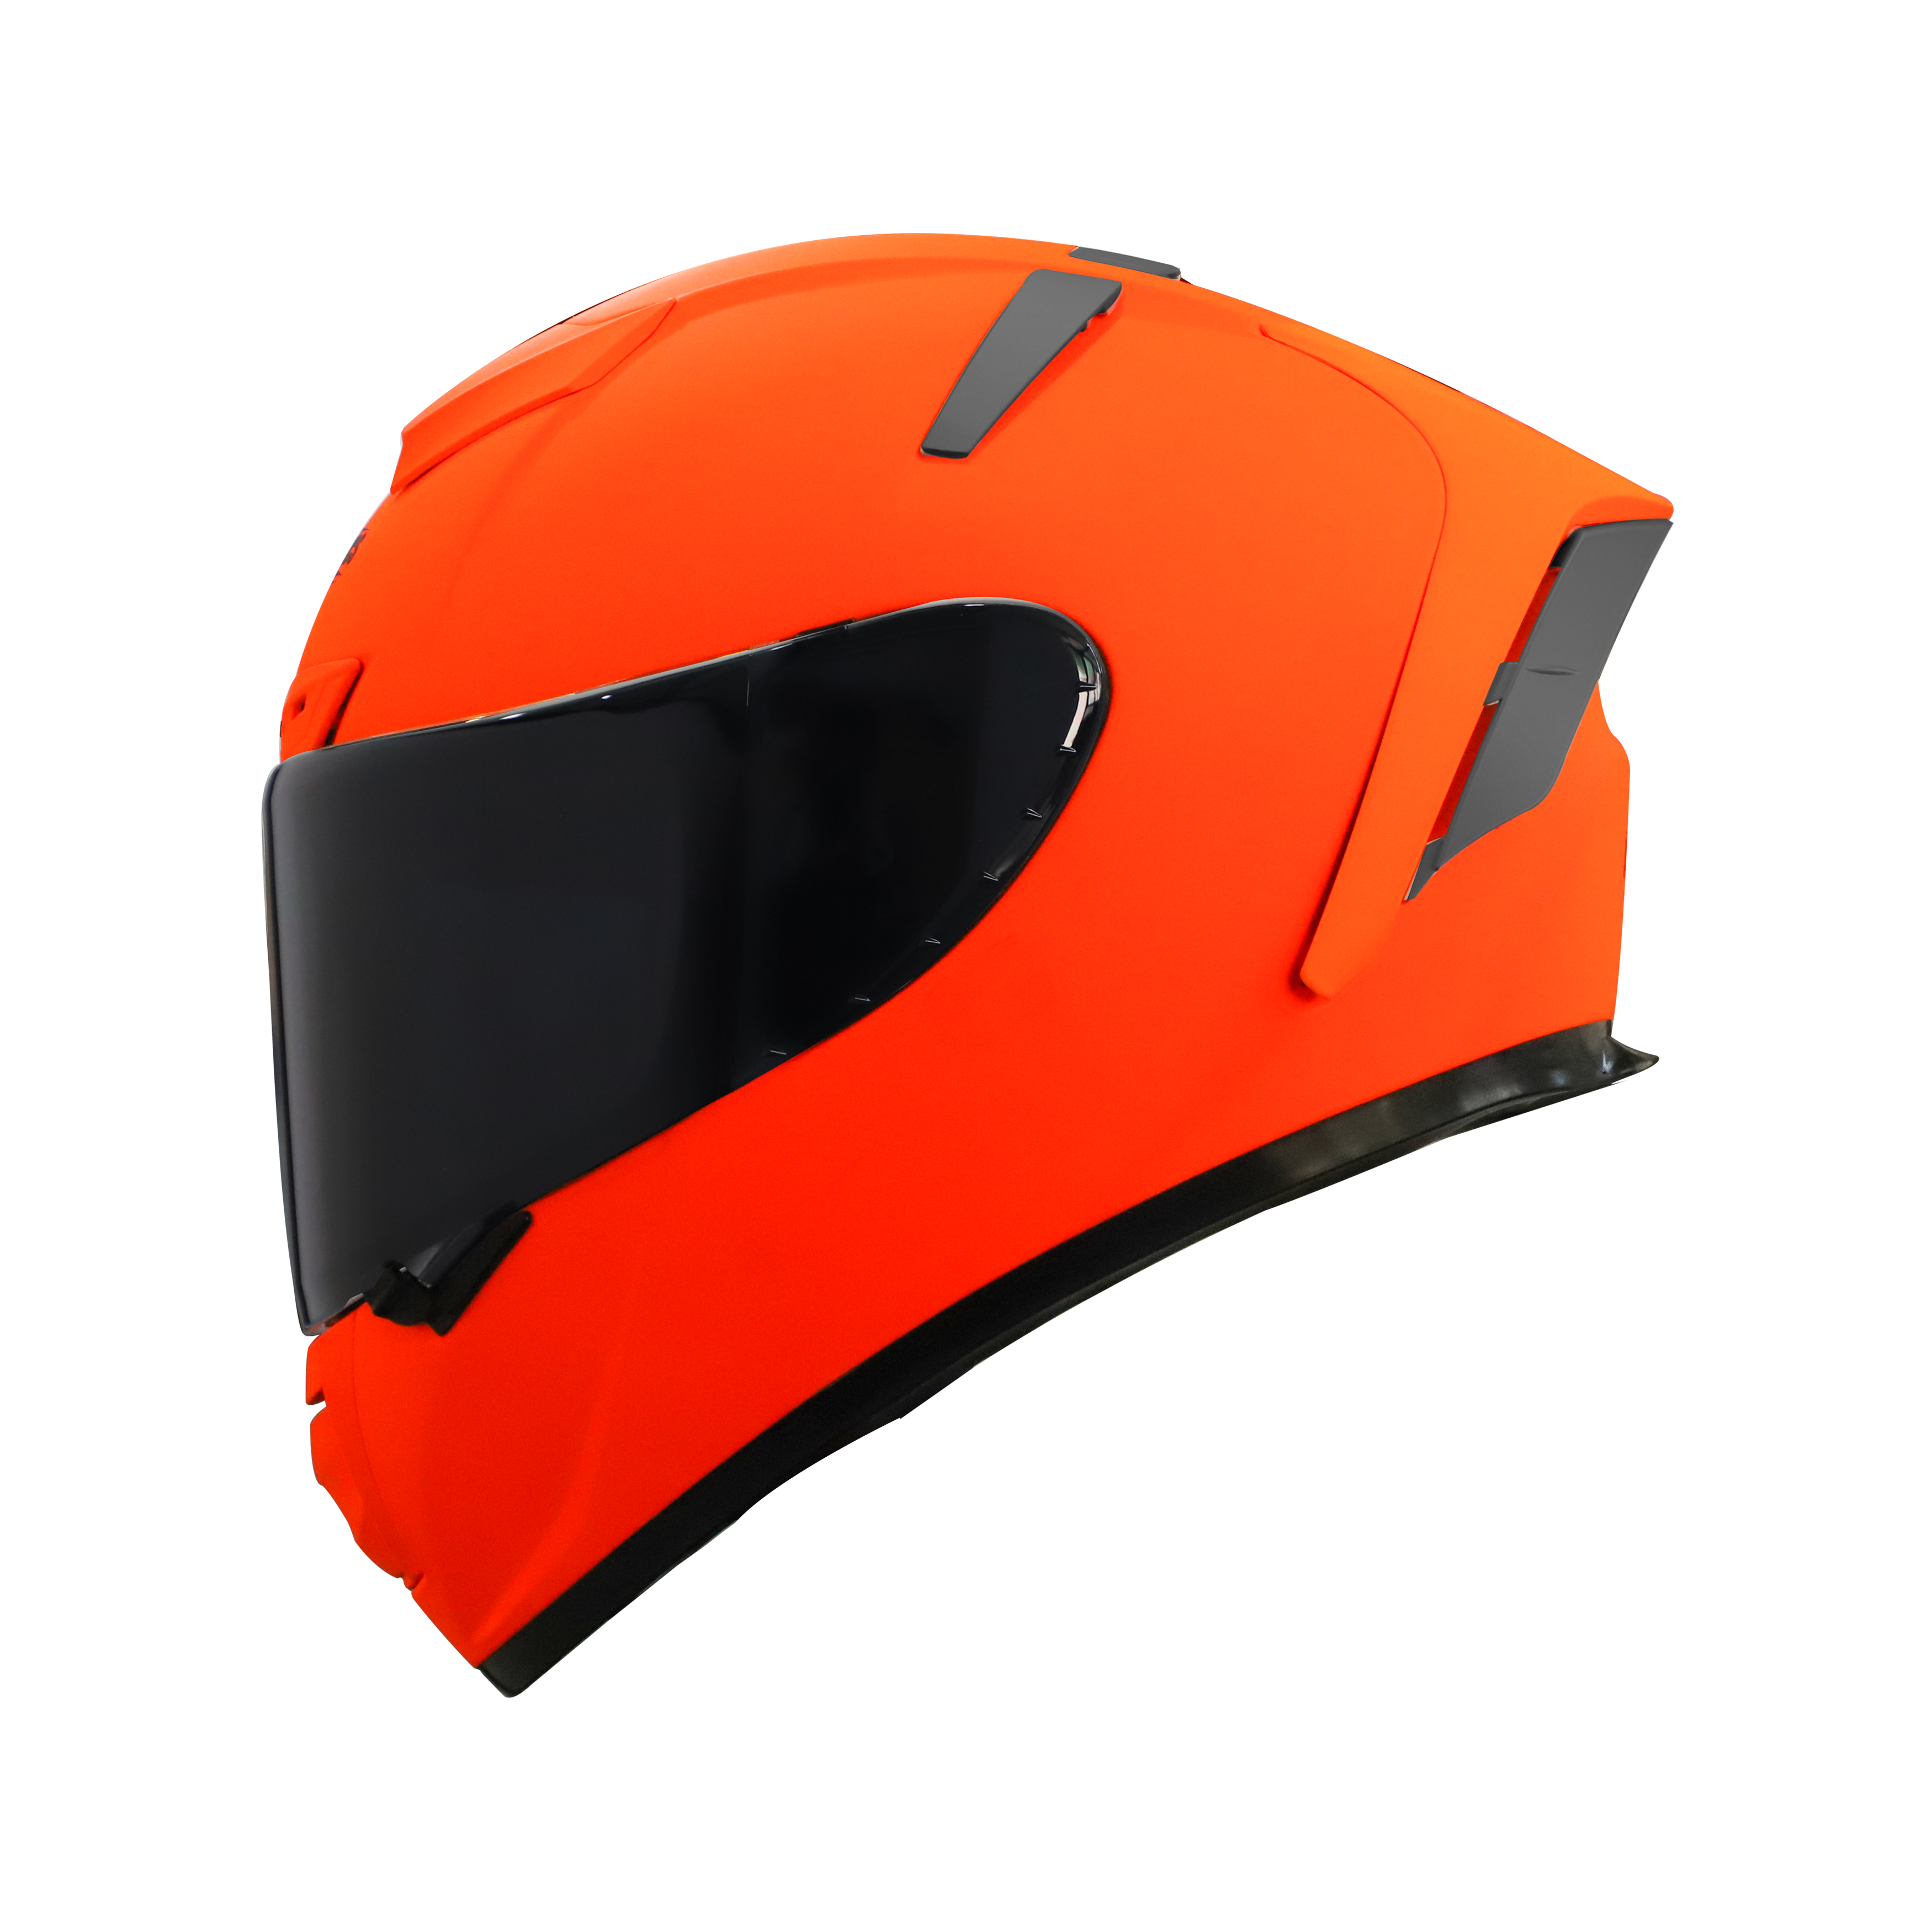 Steelbird SA-2 7Wings Super Aeronautics Full Face Helmet (Glossy Fluo Orange With Smoke Visor)